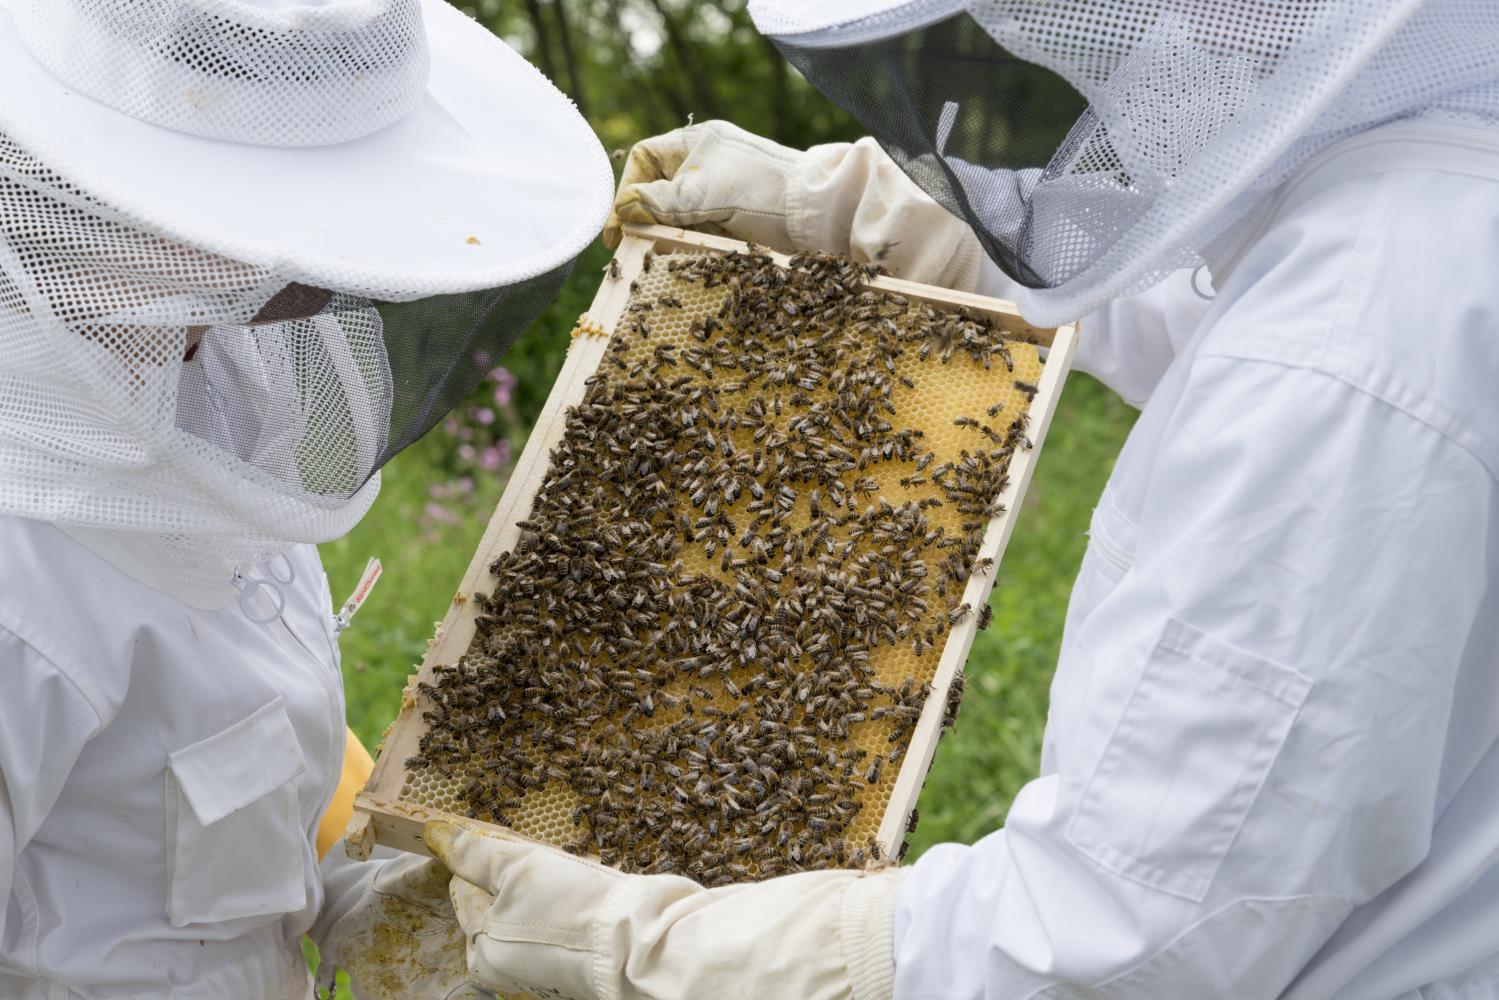 Discovering bees - Beekeeping